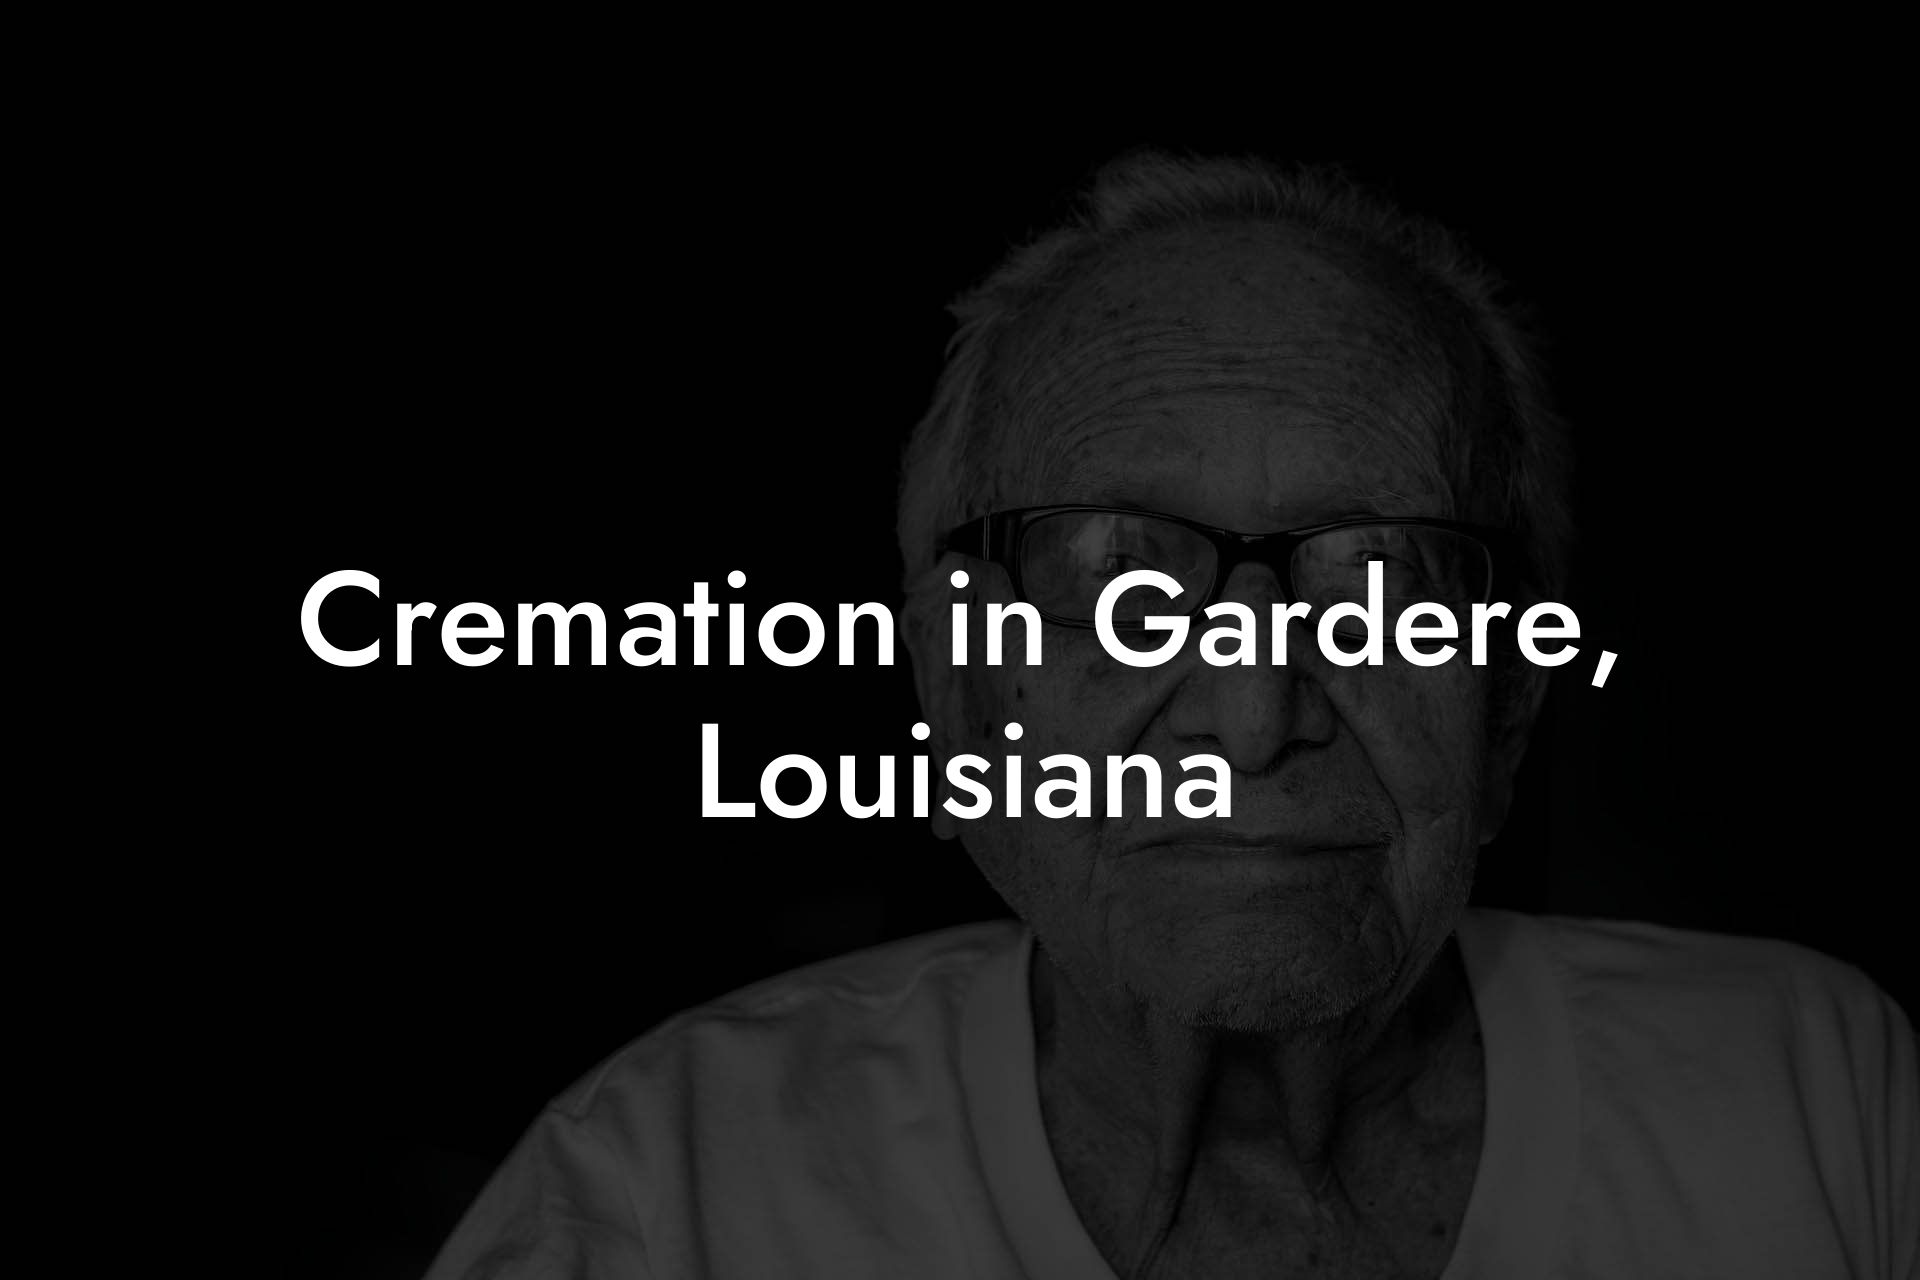 Cremation in Gardere, Louisiana